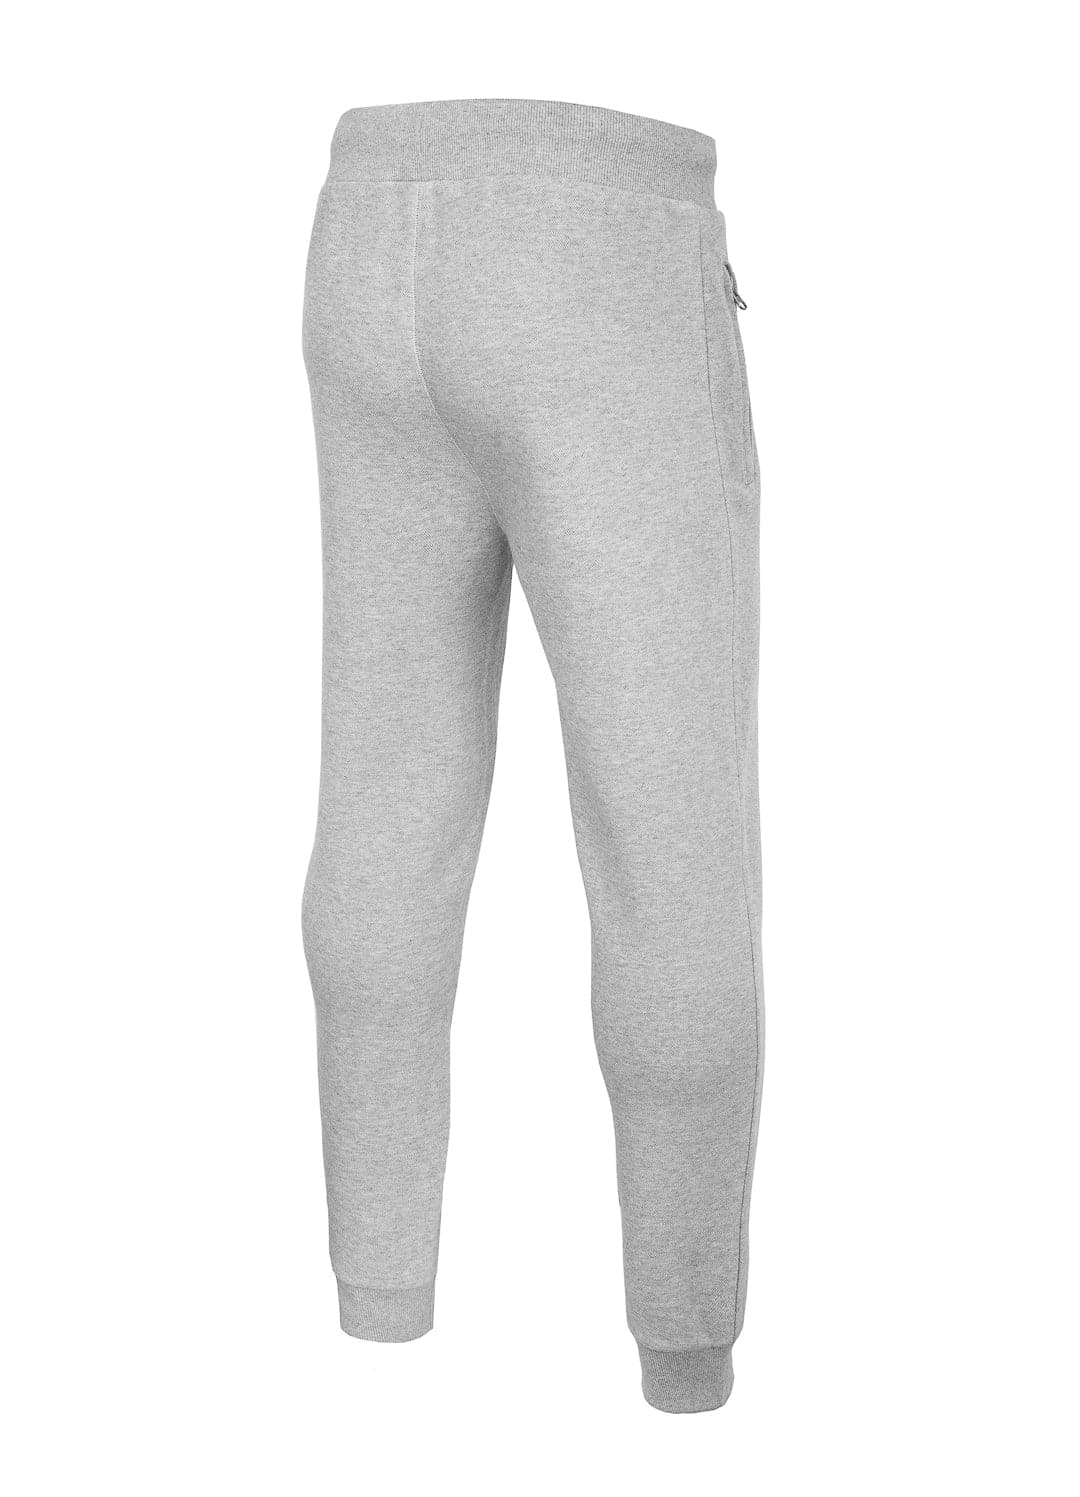 Spodnie dresowe Premium Pique NEW LOGO Szare - Pitbull West Coast International Store 